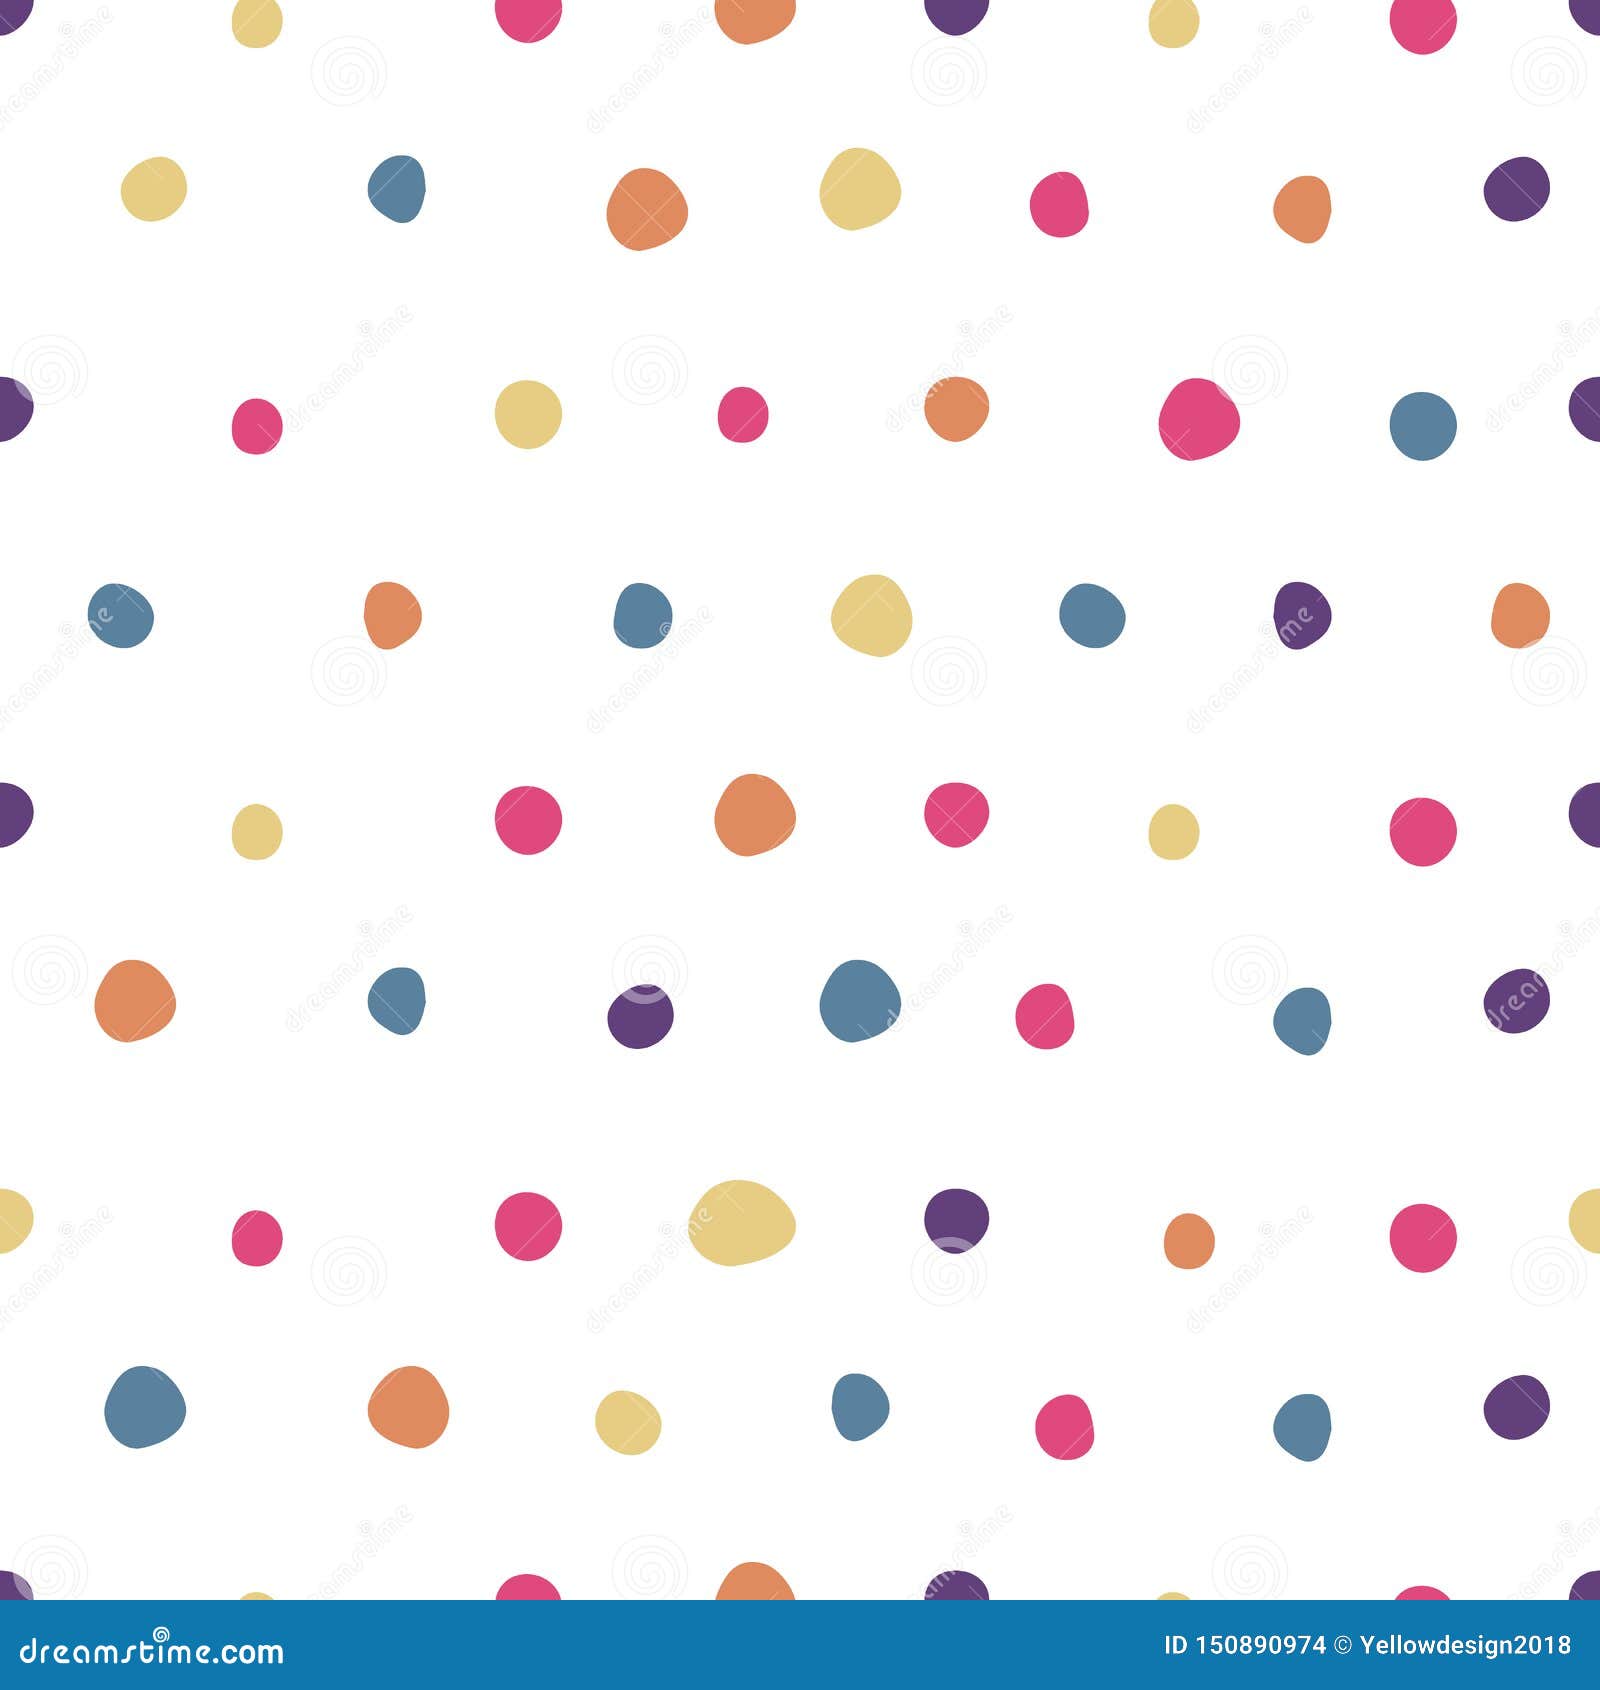 Polka Dot Phone Wallpapers  Top Free Polka Dot Phone Backgrounds   WallpaperAccess